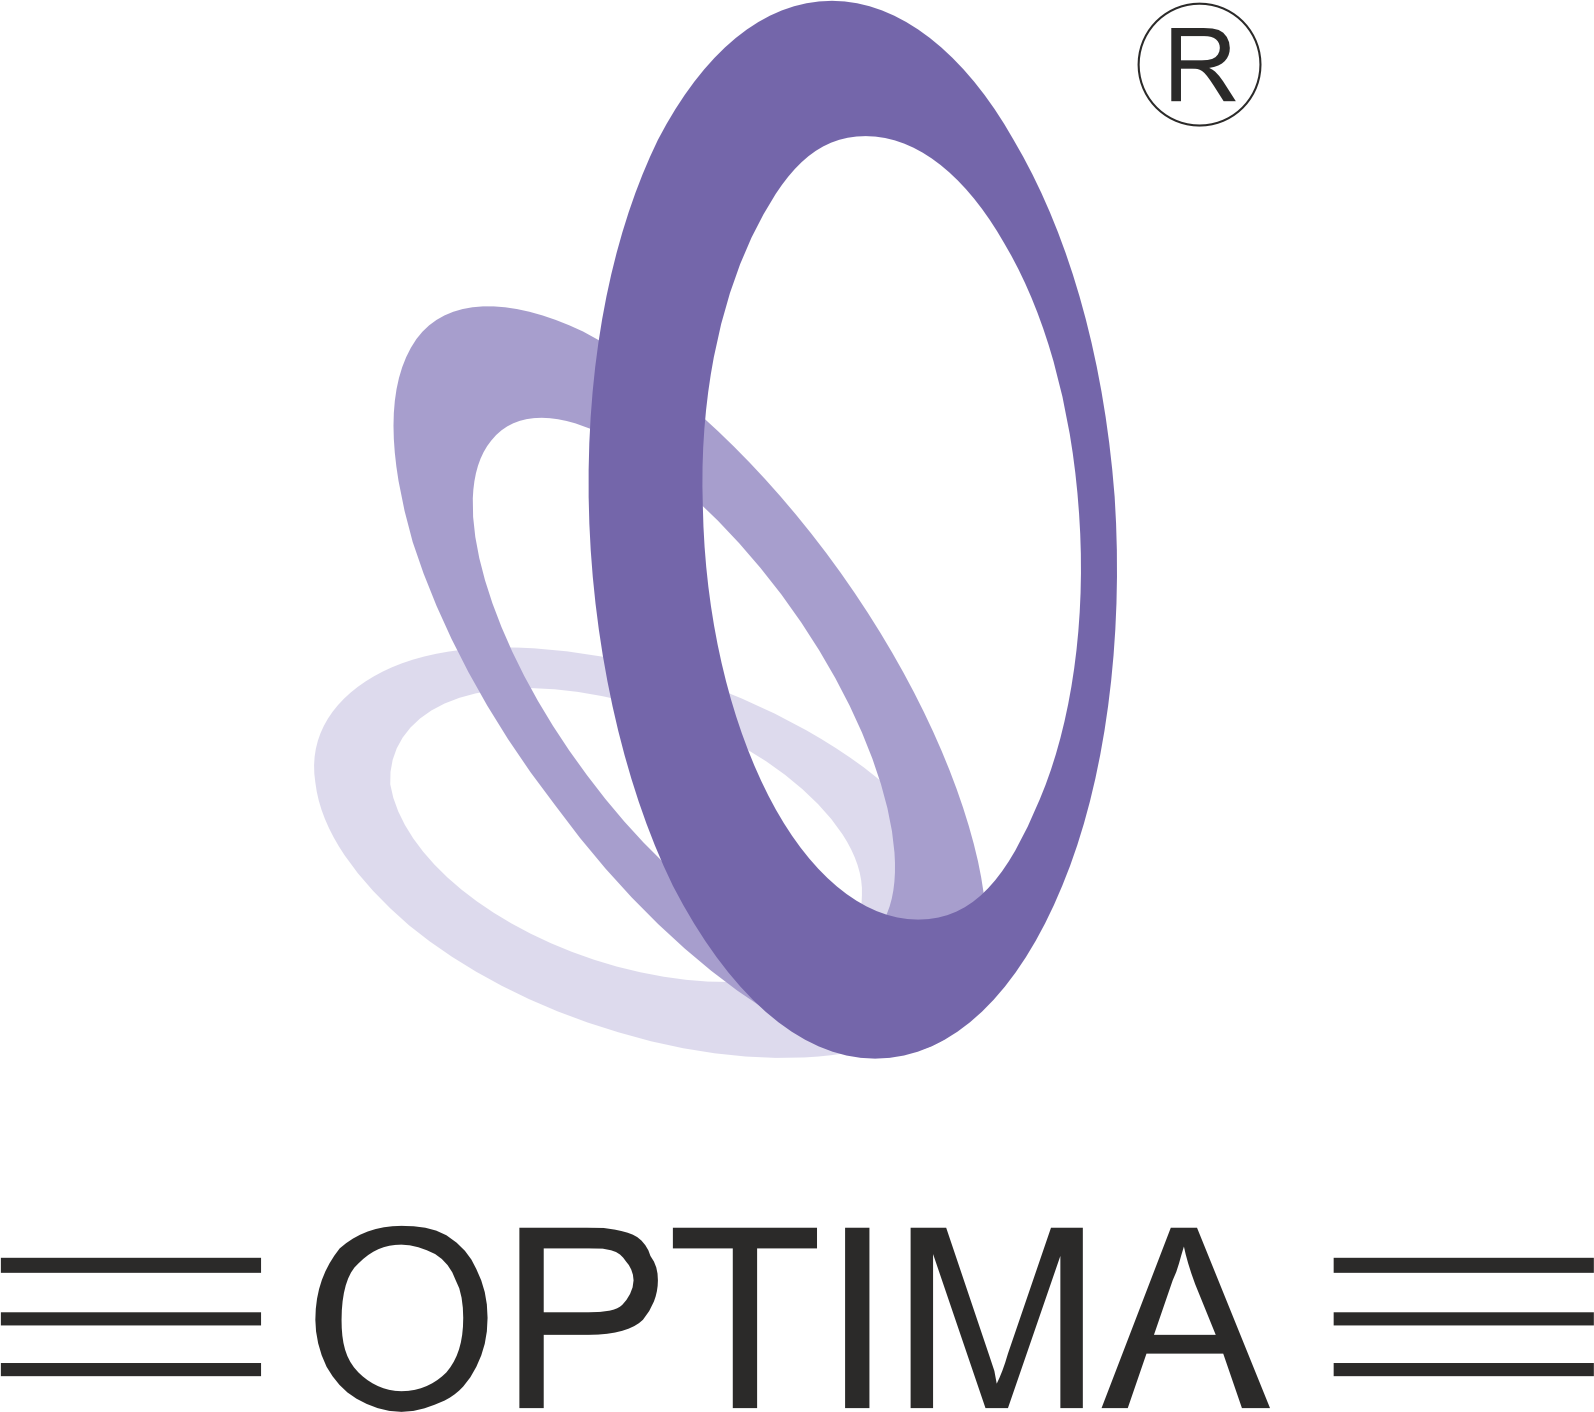 Optima life logo